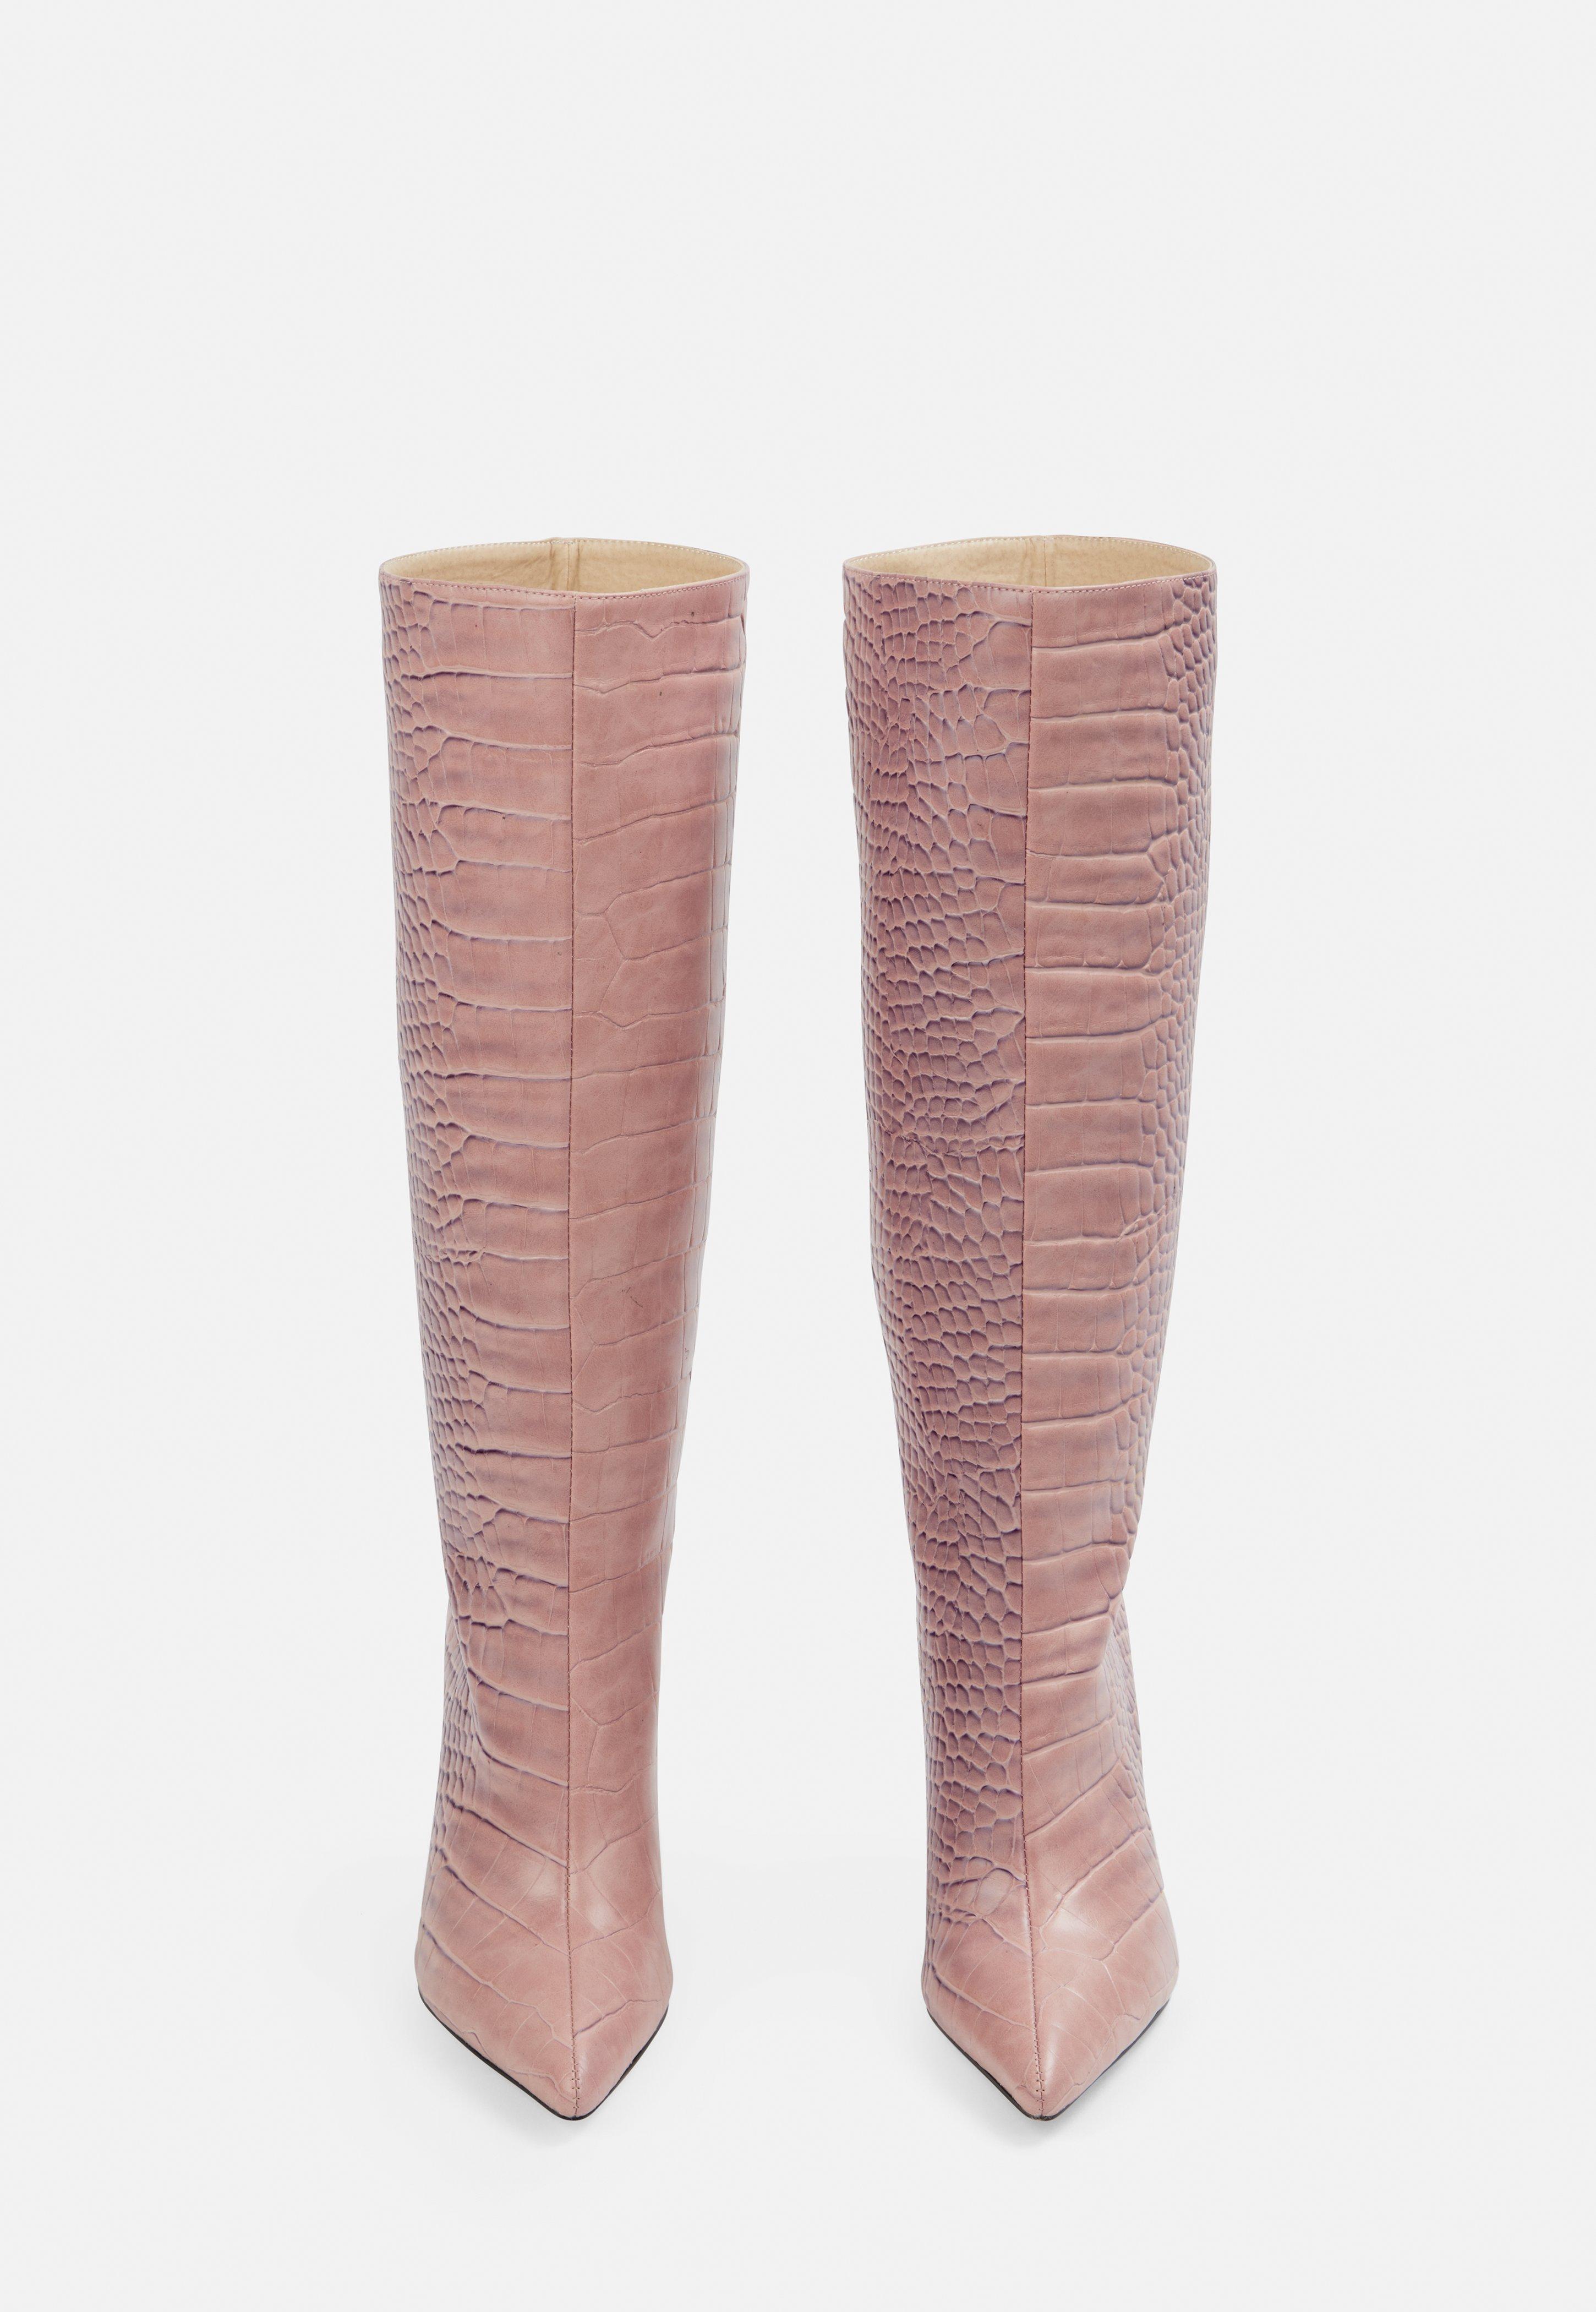 pink croc boots